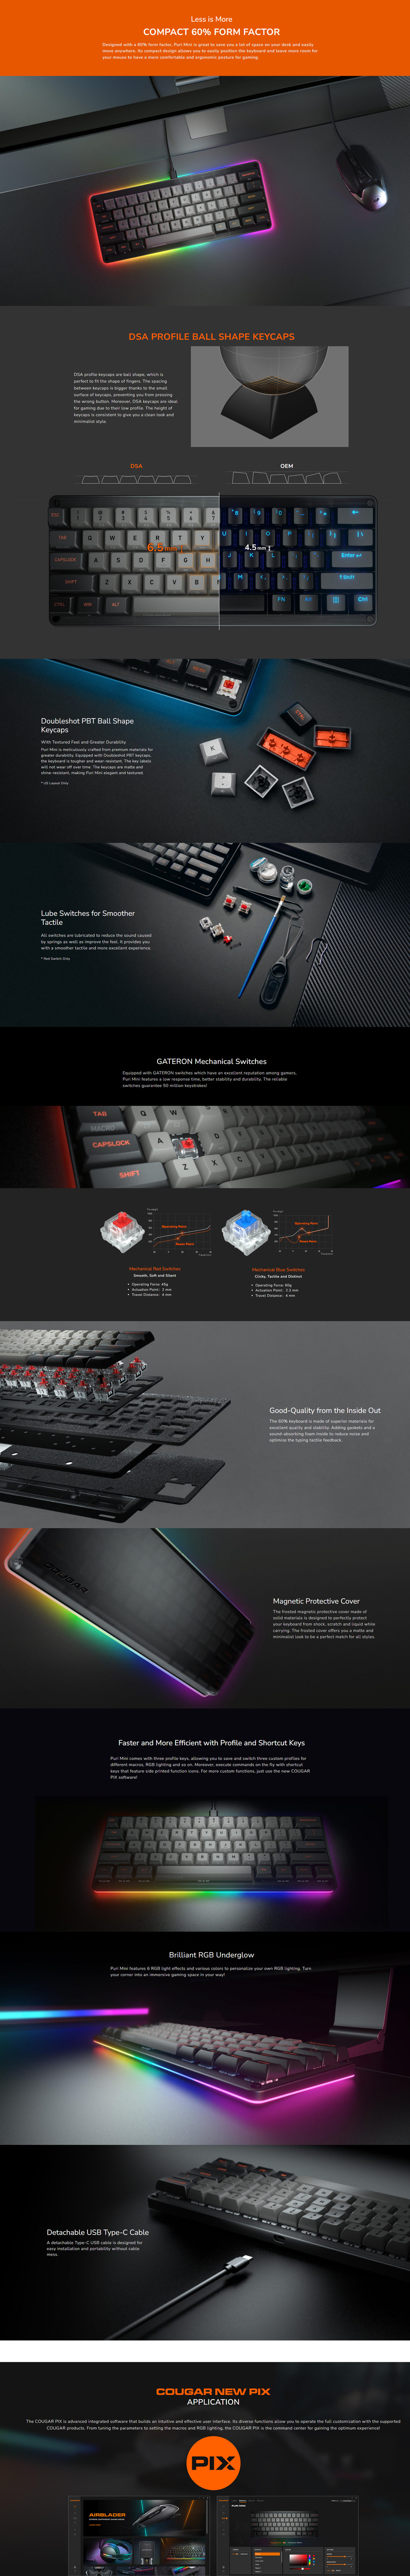 cougar puri mini red mechanical gaming keyboard cgr-wm1mi-prm